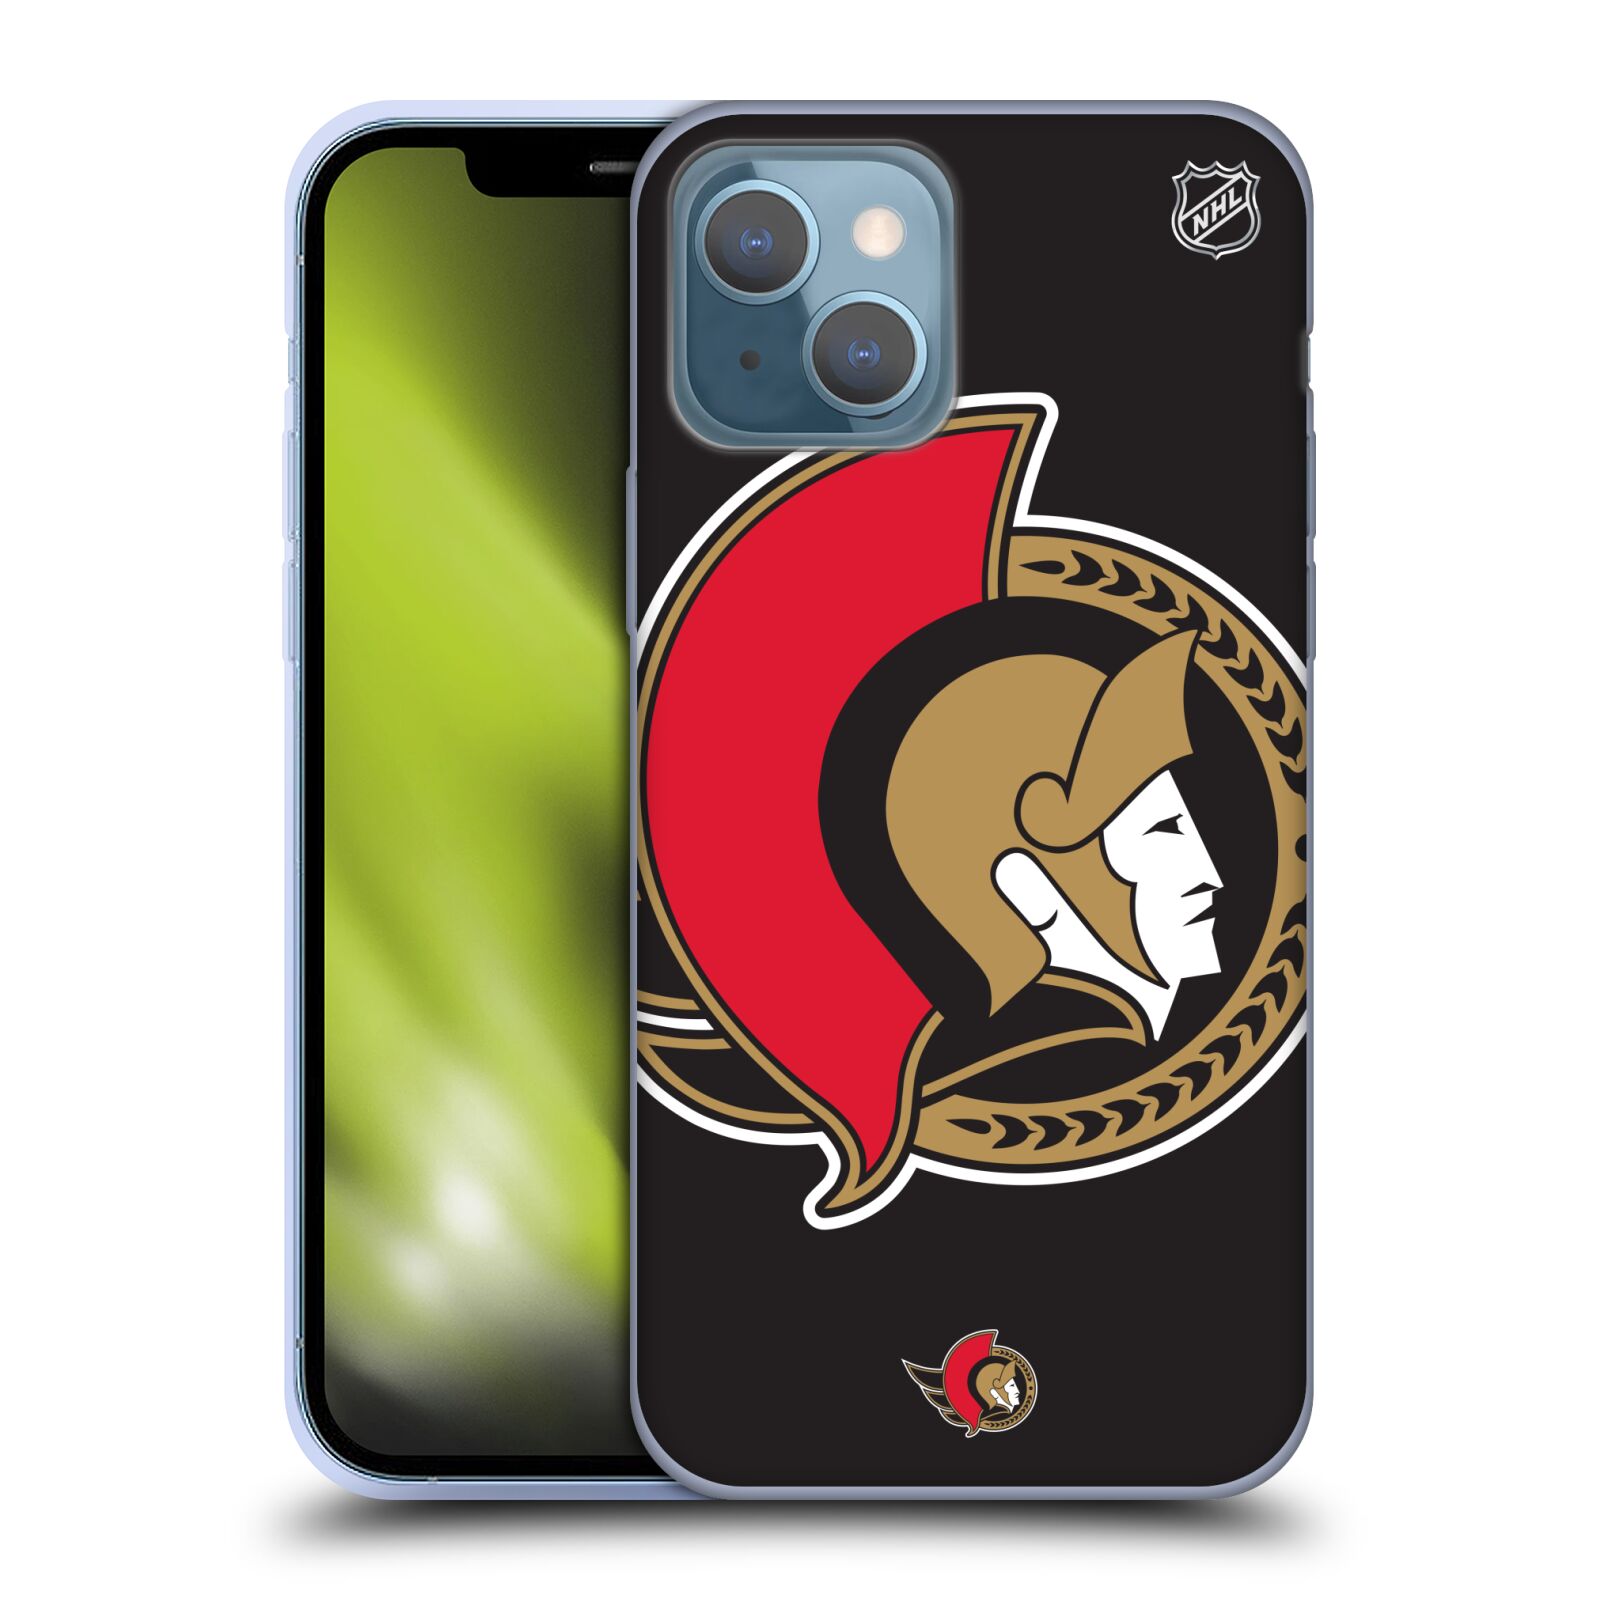 Silikonové pouzdro na mobil Apple iPhone 13 - NHL - Velké logo Ottawa Senators (Silikonový kryt, obal, pouzdro na mobilní telefon Apple iPhone 13 s licencovaným motivem NHL - Velké logo Ottawa Senators)